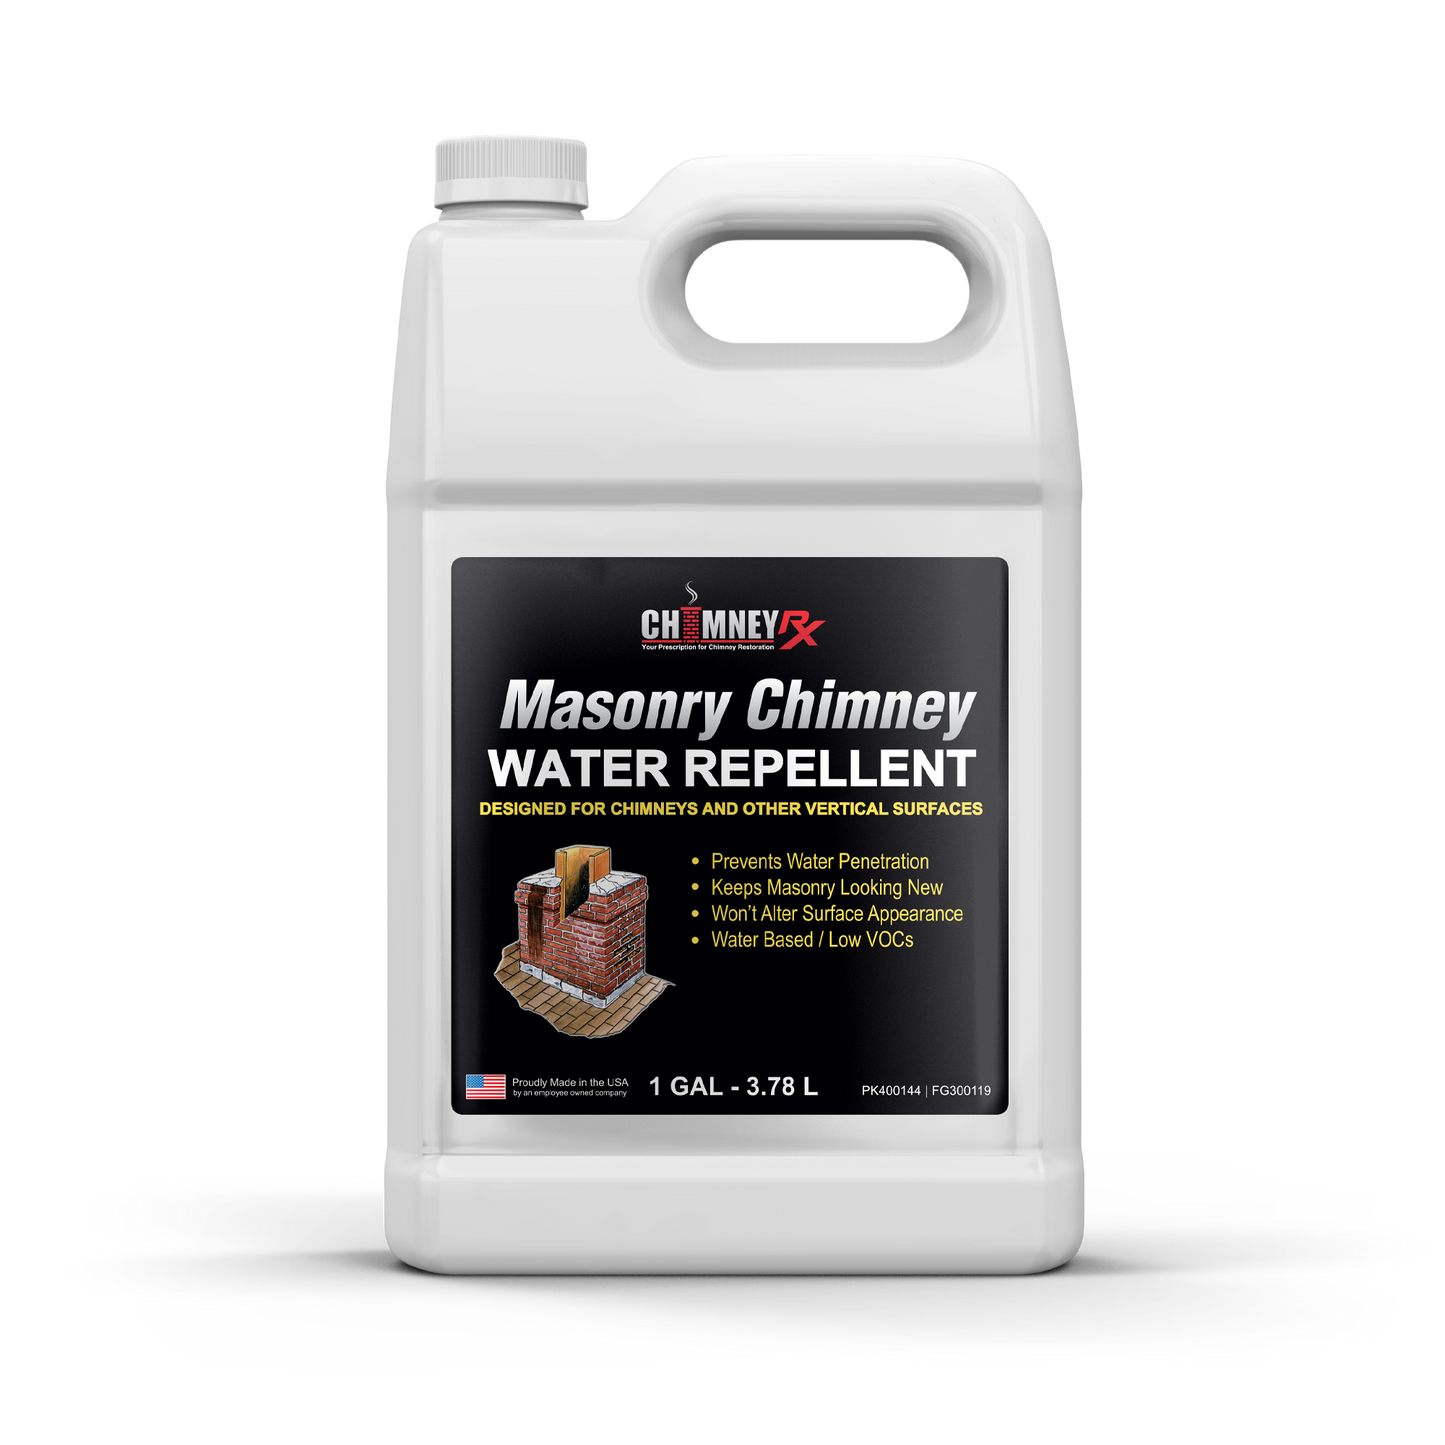 Masonry Chimney Water Repellent